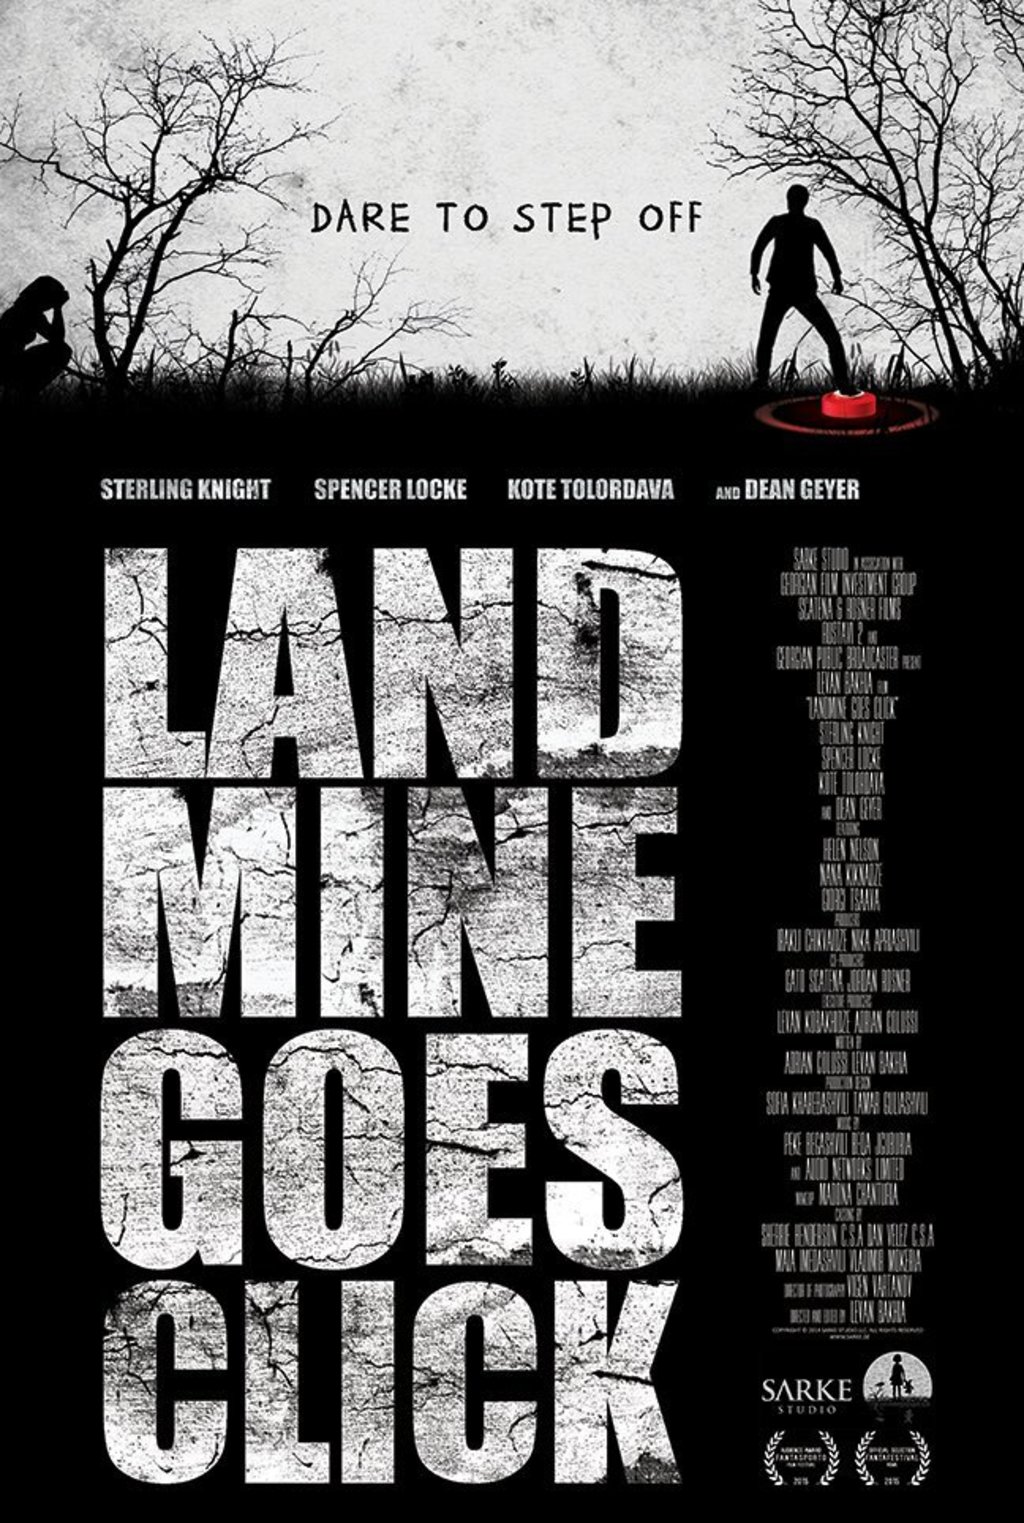 Landmine goes.click